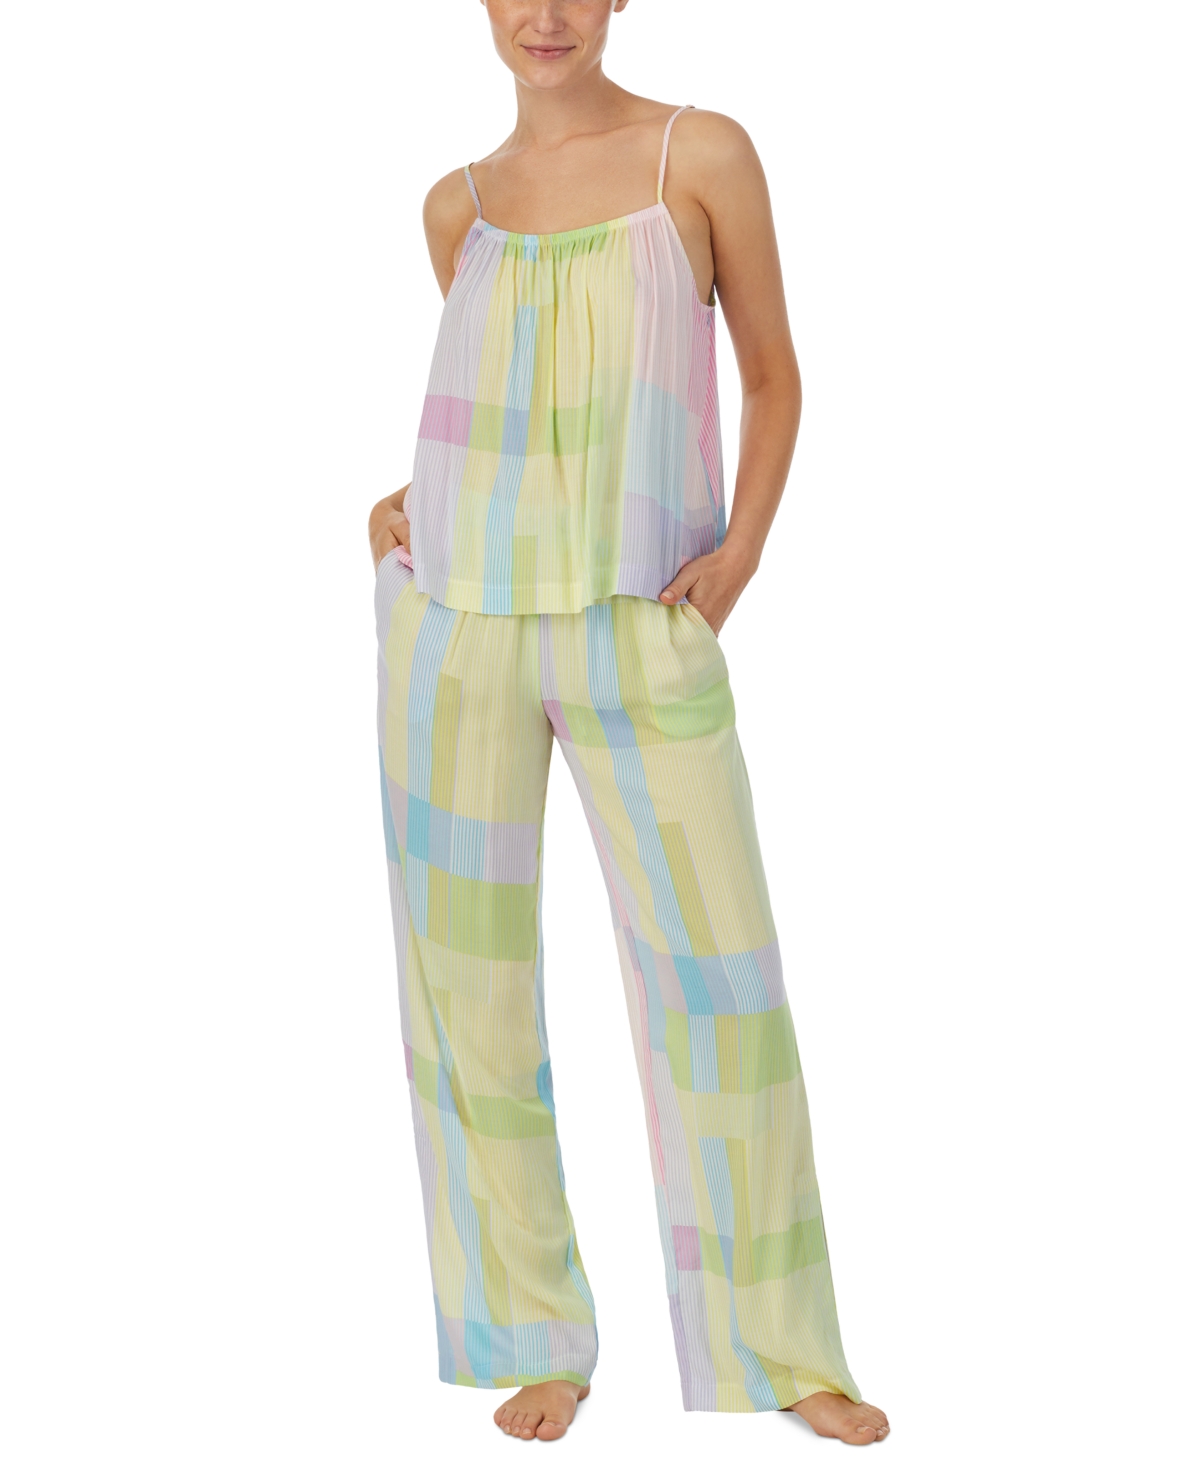 Women's 2-Pc. Plaid Long Tank Pajamas Set - Multi Stripe